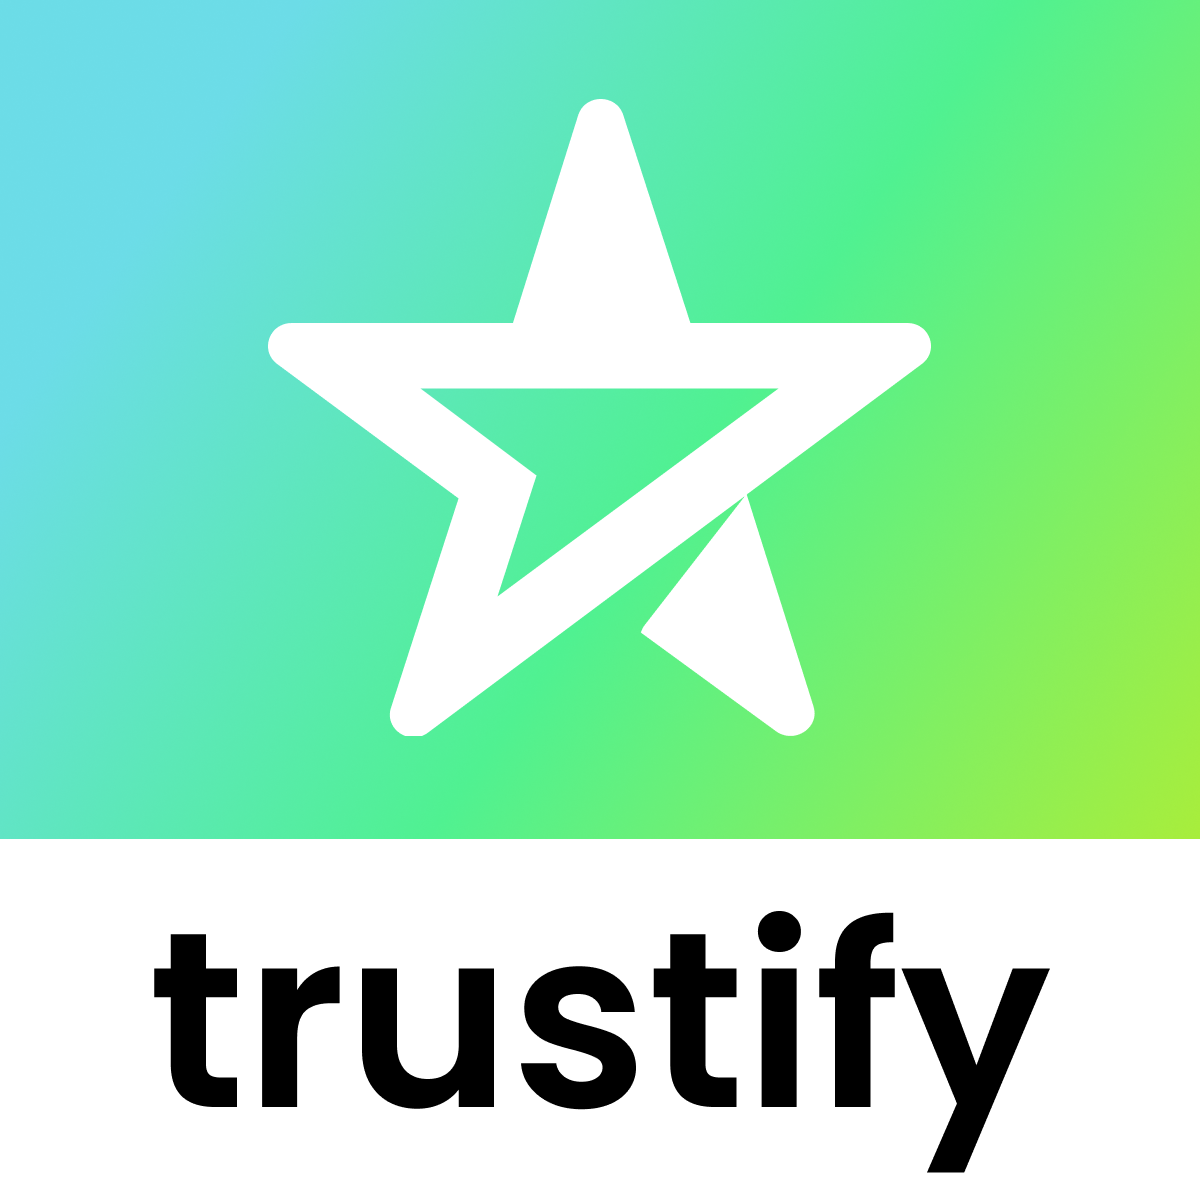 Trusrify Product Reviews App